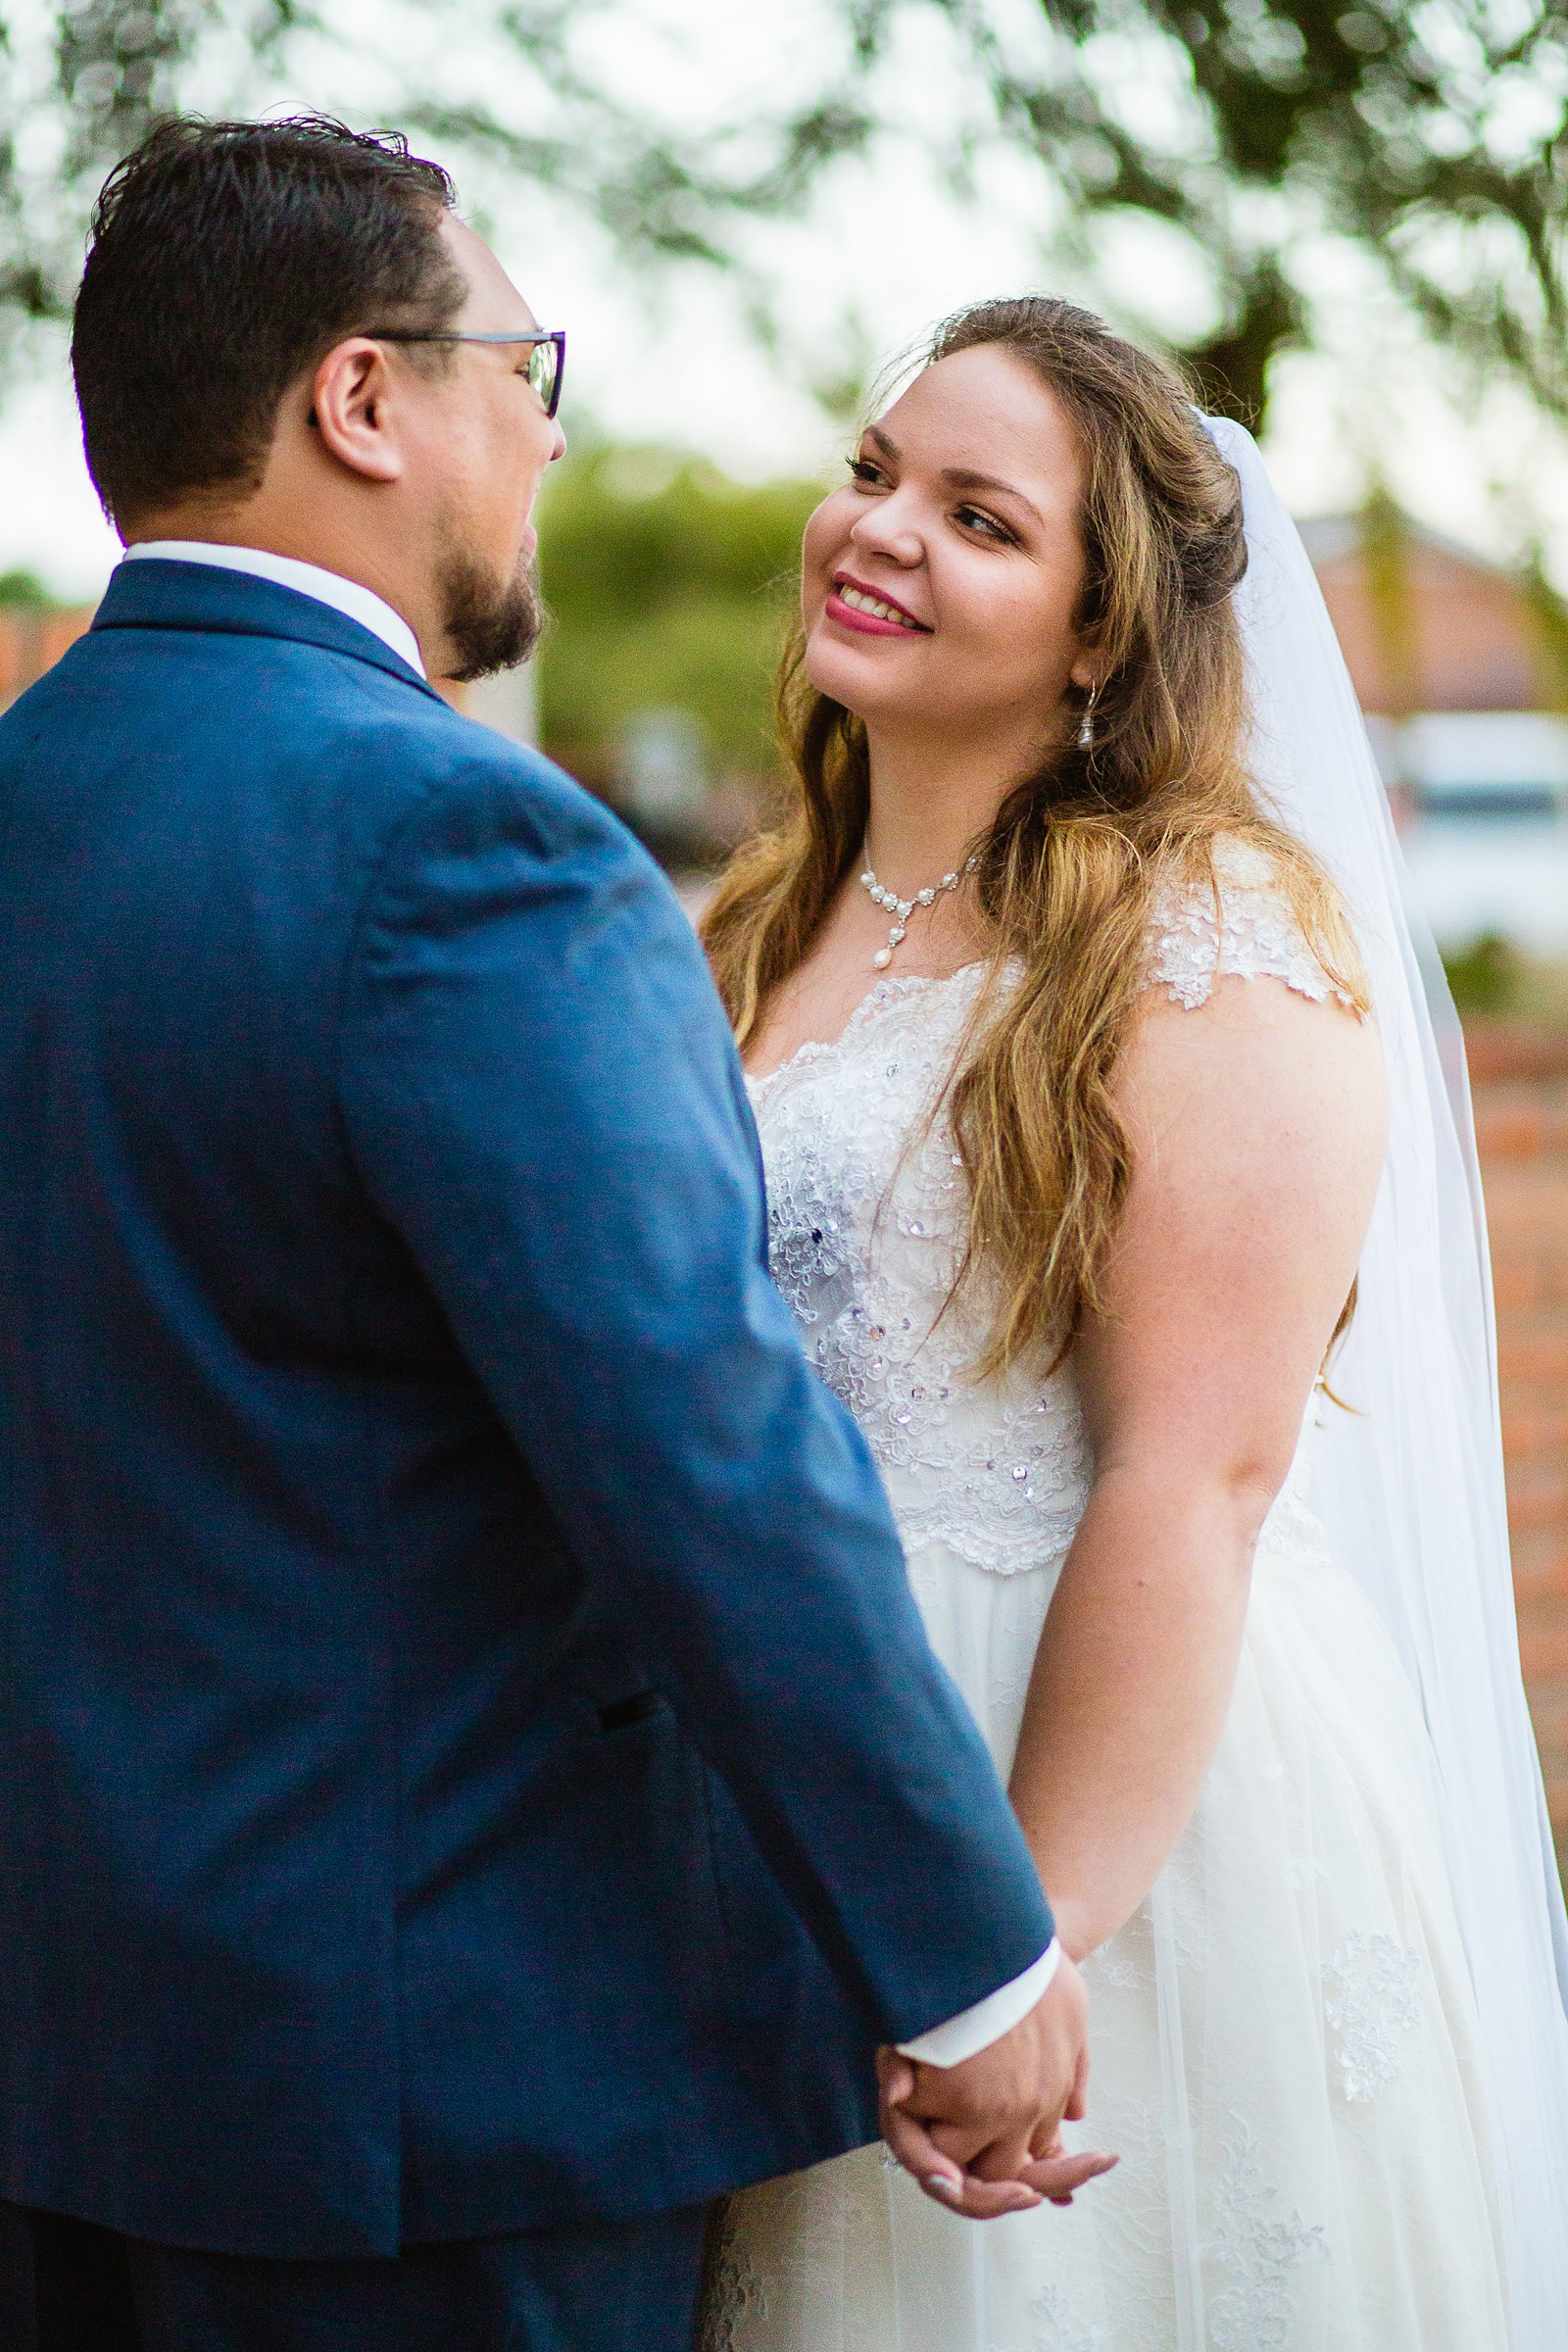 Bride and Groom share an intimate moment at their Backyard wedding by Arizona wedding photographer PMA Photography.